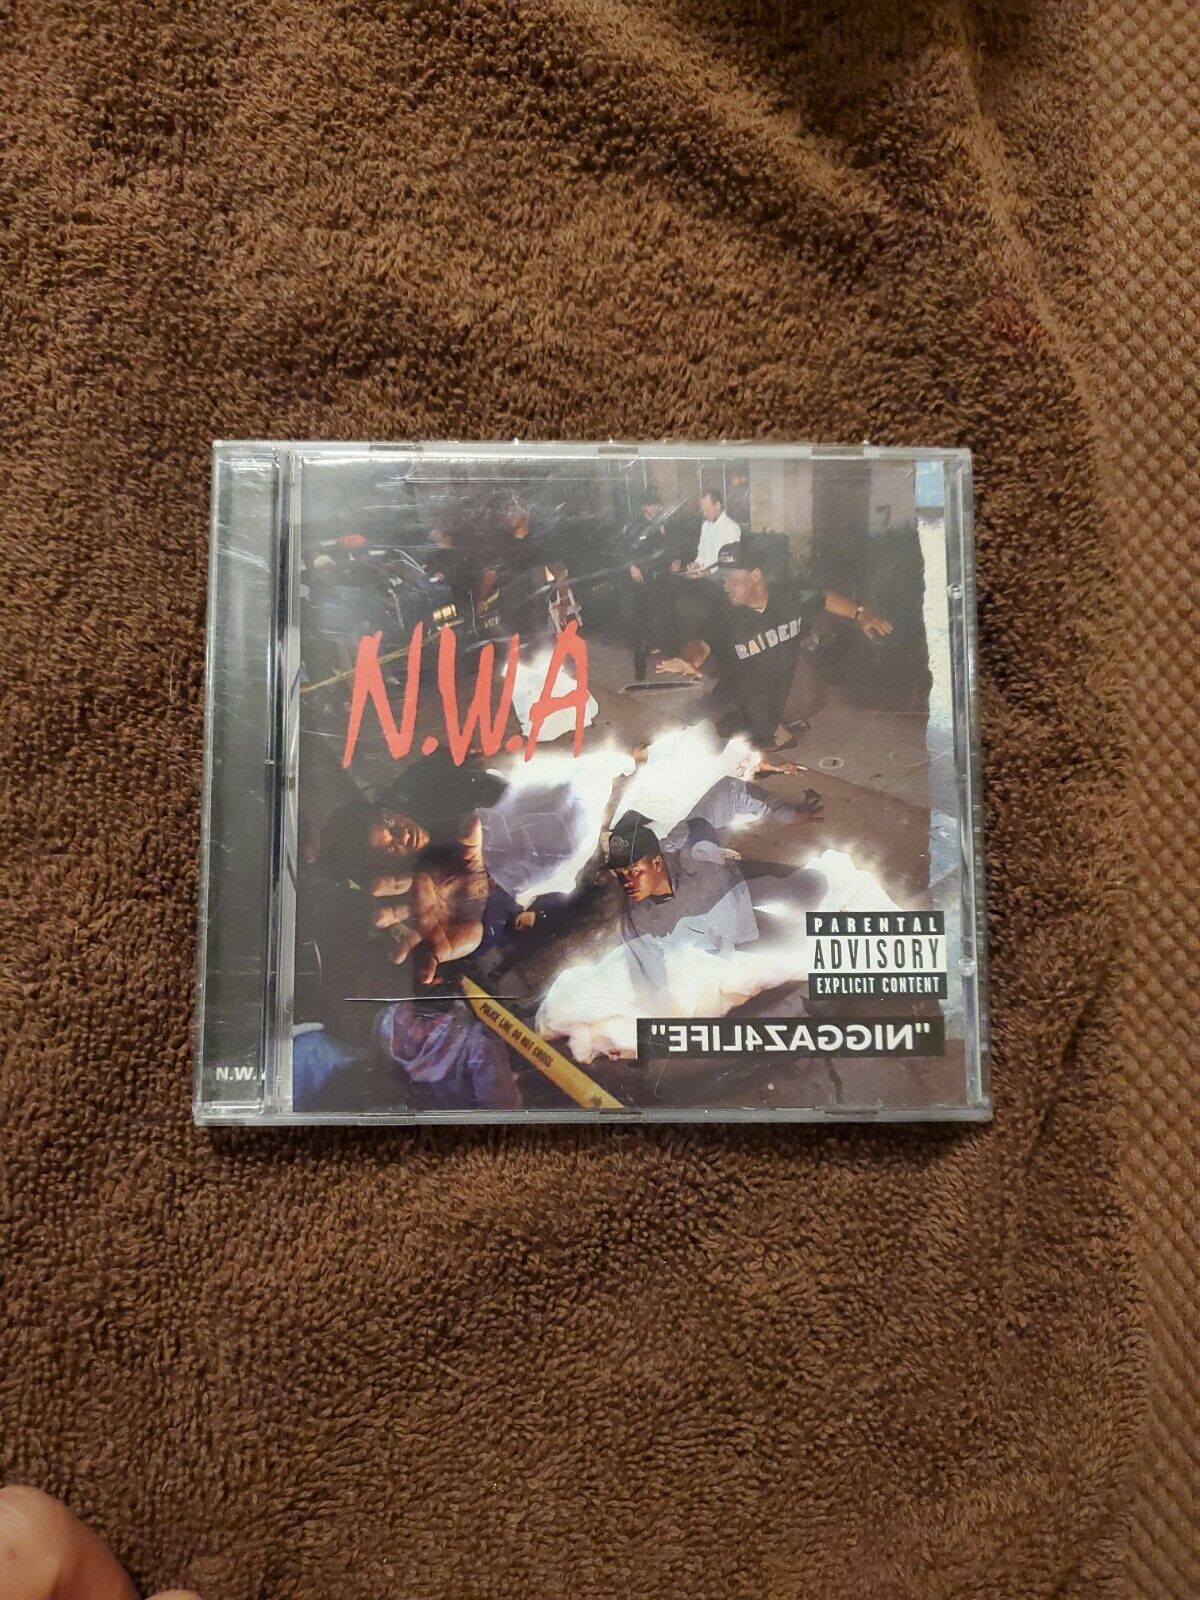 Niggaz4life [Remastered] [Bonus EP] by N.W.a. (CD, 2002)